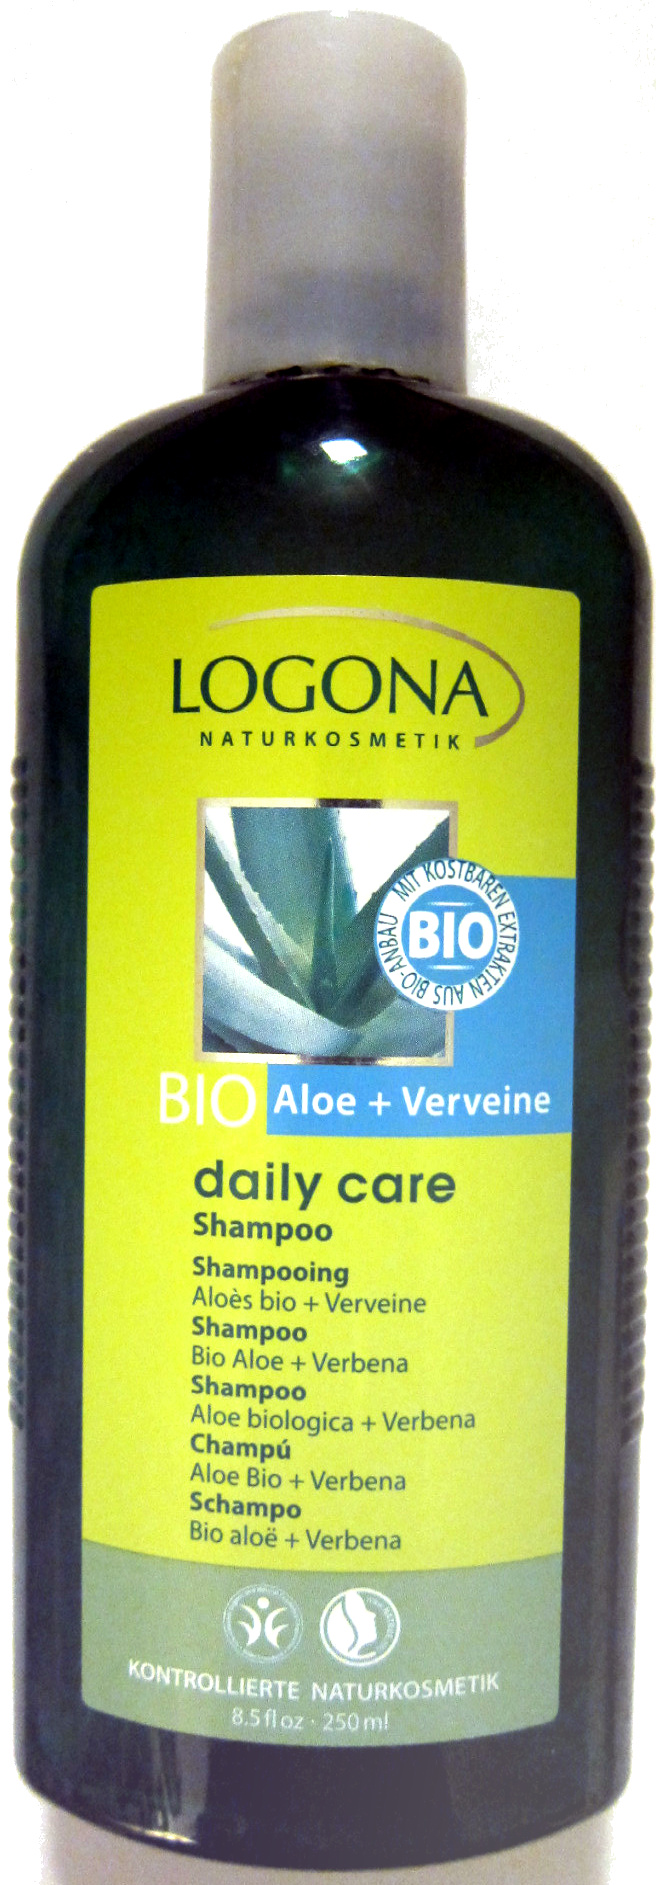 Shampoing Logona BIO Aloe + Verveine Daily Care - Produit - fr